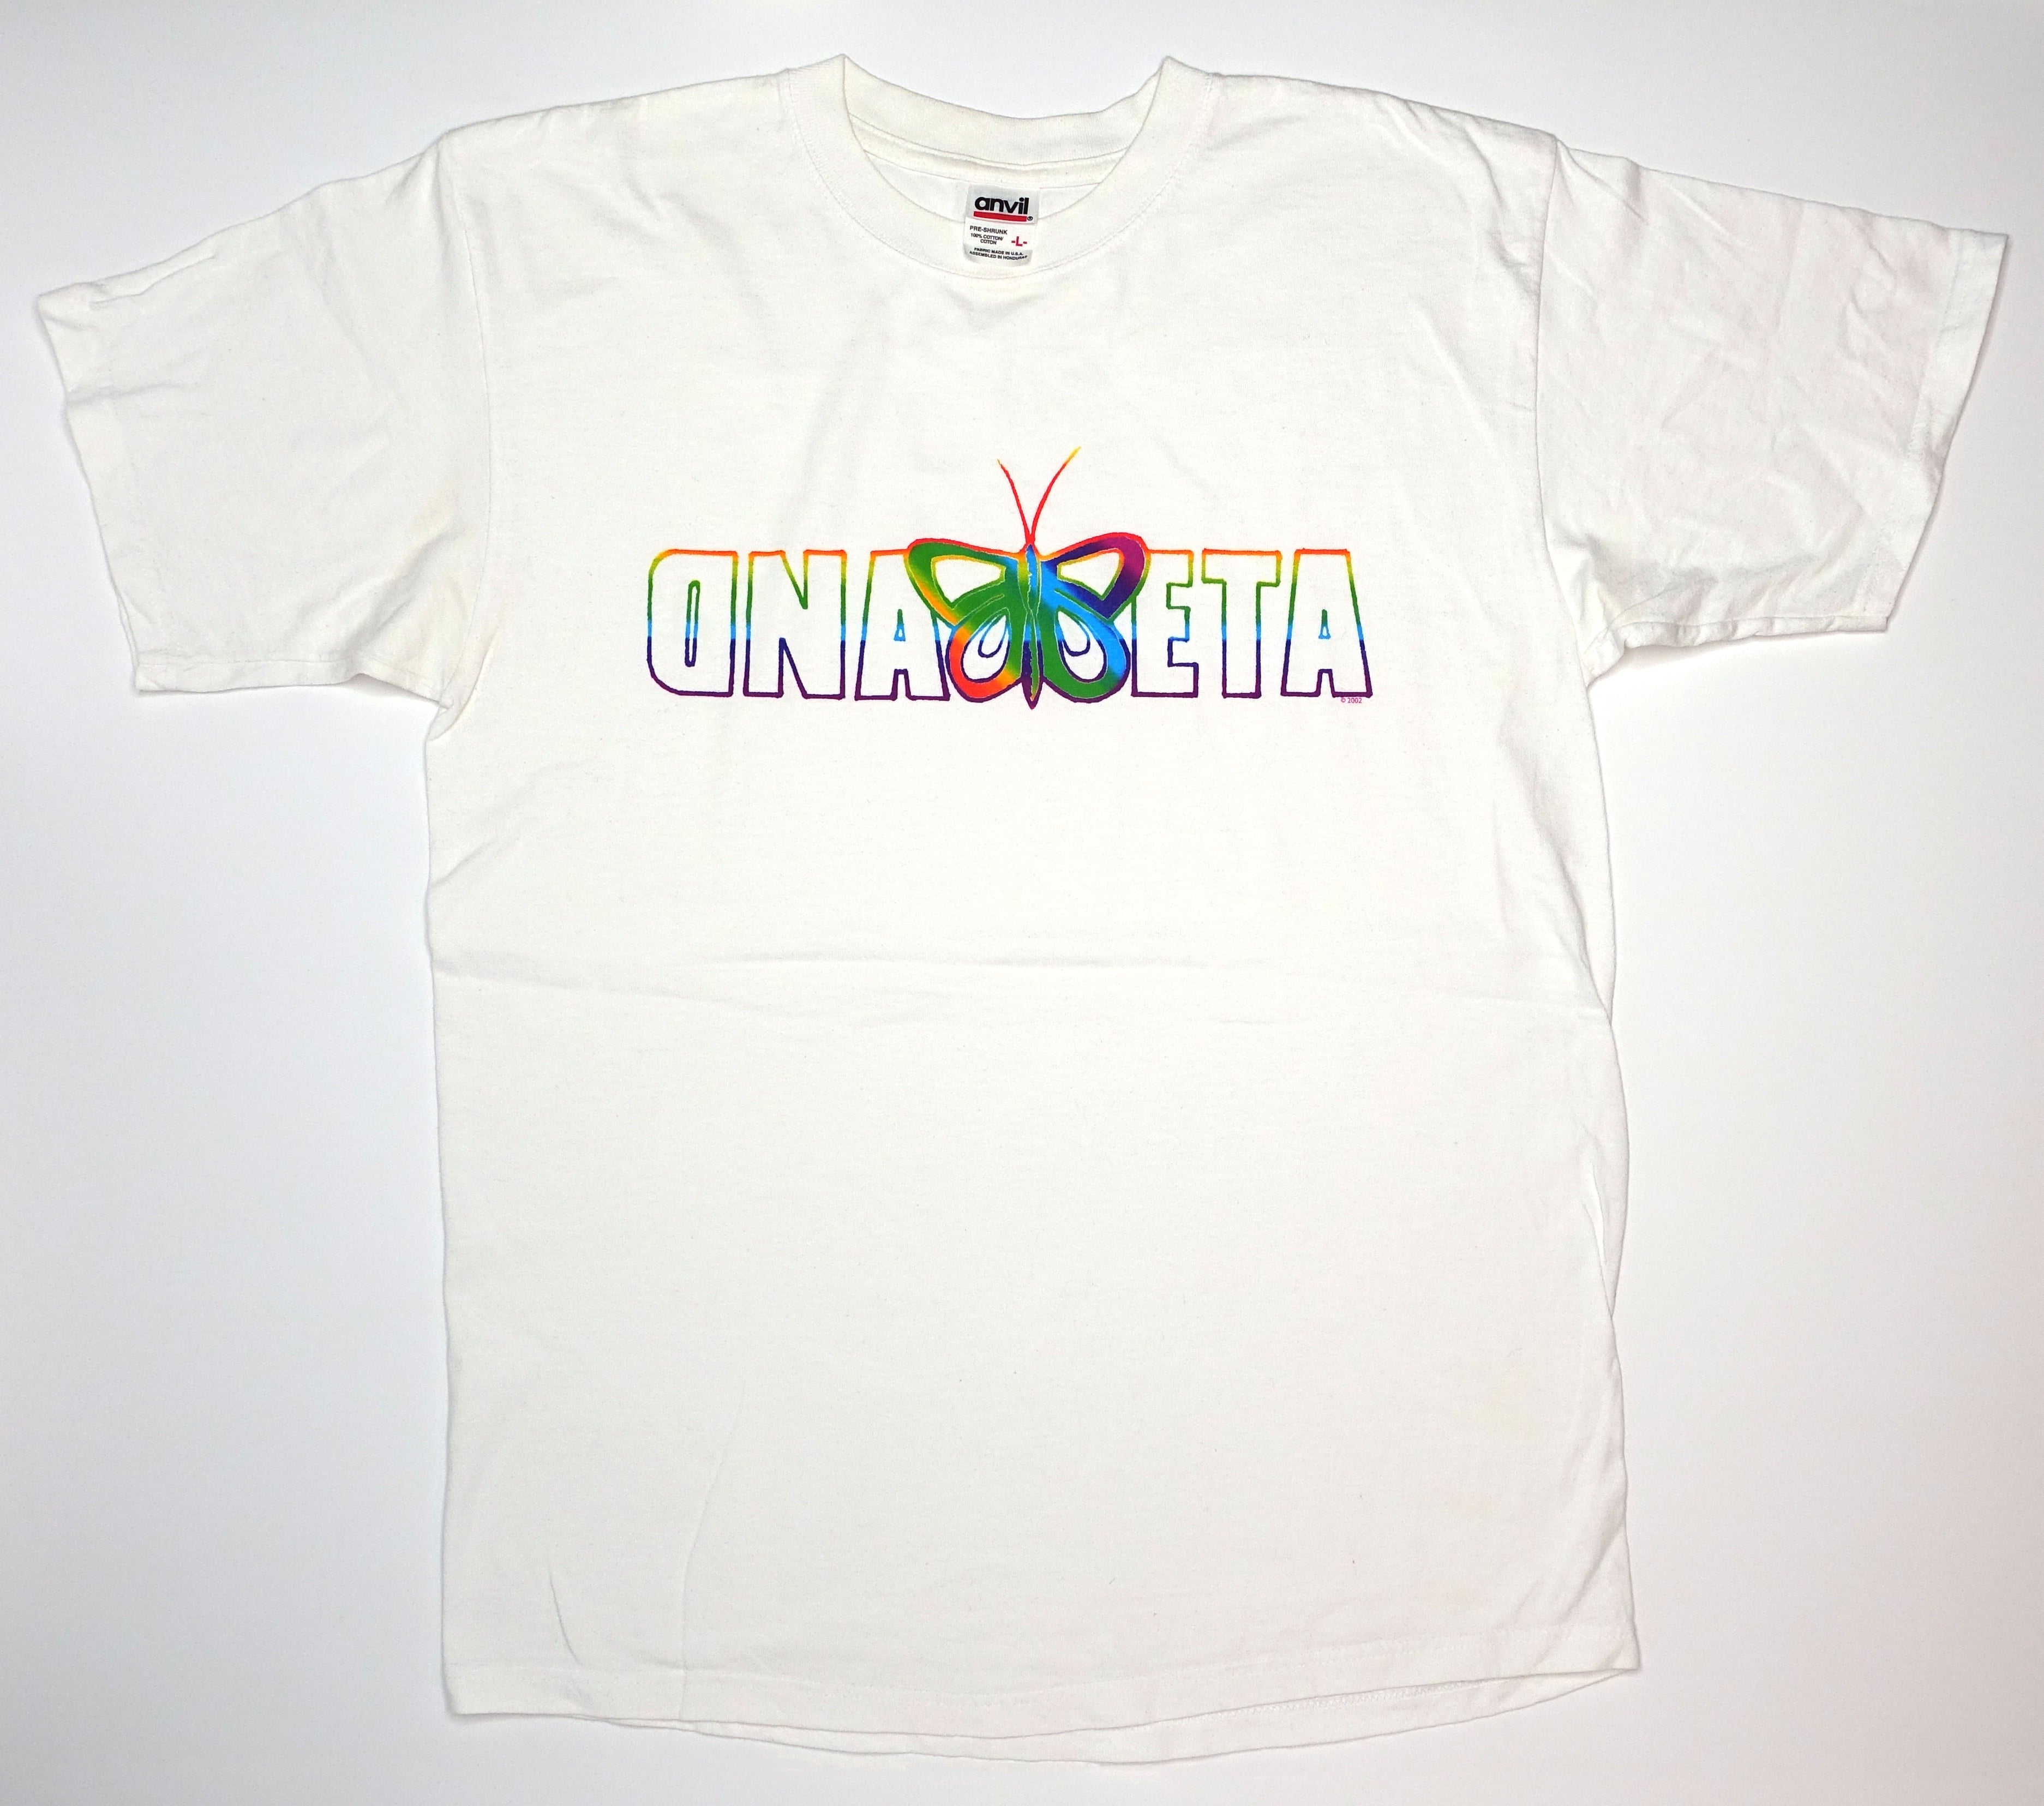 Beta Band - Butterfly / Hot Shots II 2001 Tour Shirt Size Large